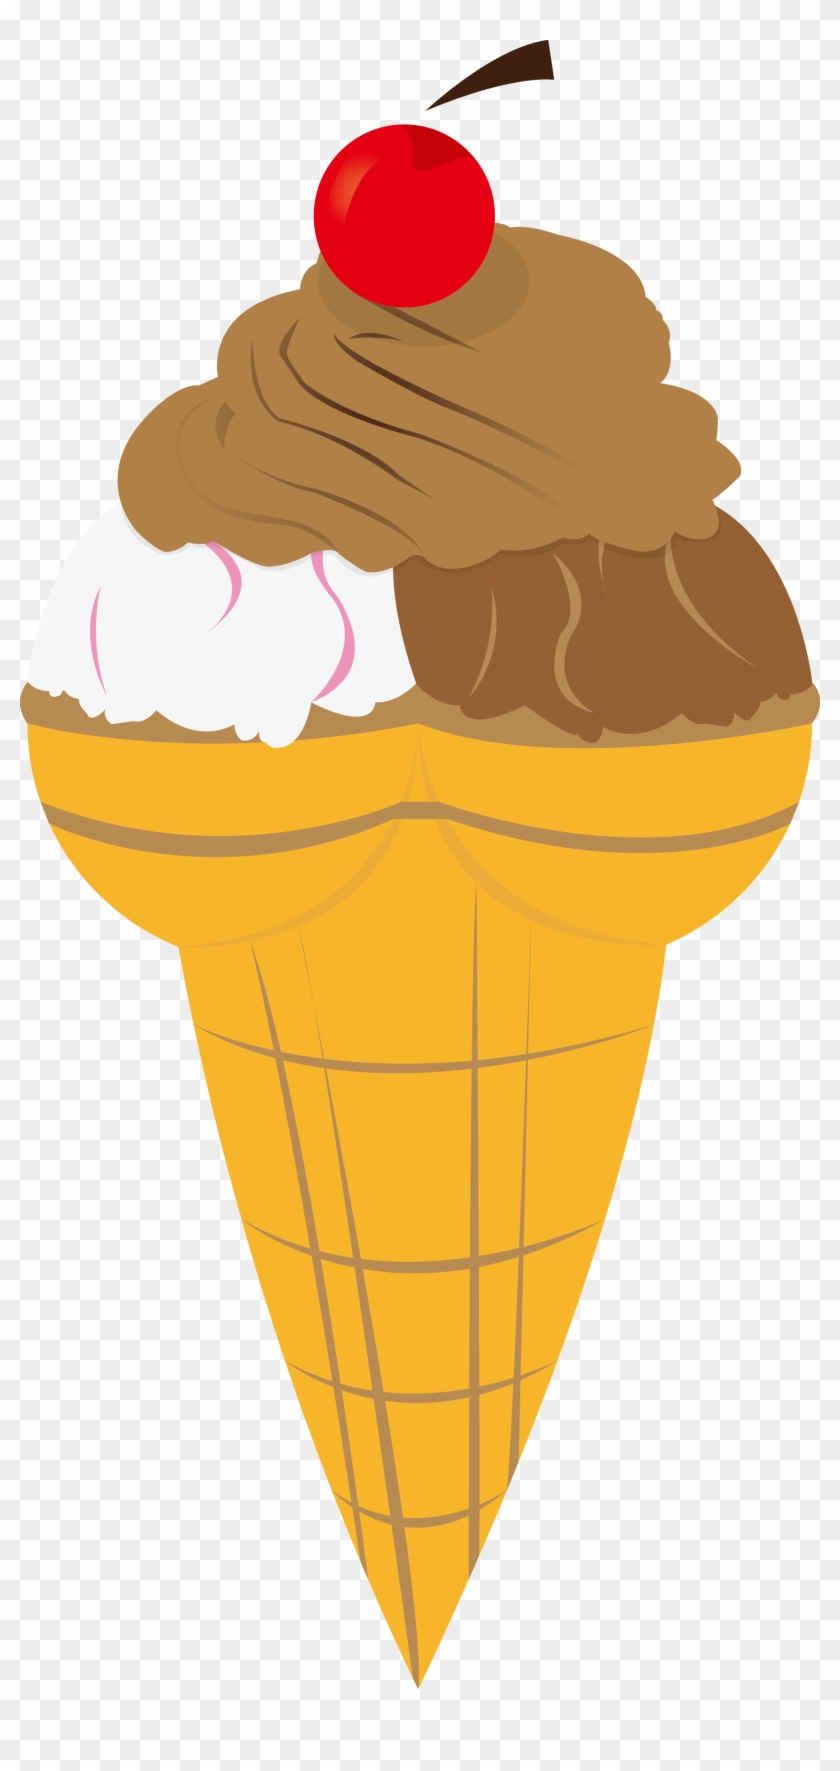 Neapolitan Ice Cream Sundae Ice Cream Cone Cherry Ice - Neapolitan Ice Cream Sundae Ice Cream Cone Cherry Ice #410382